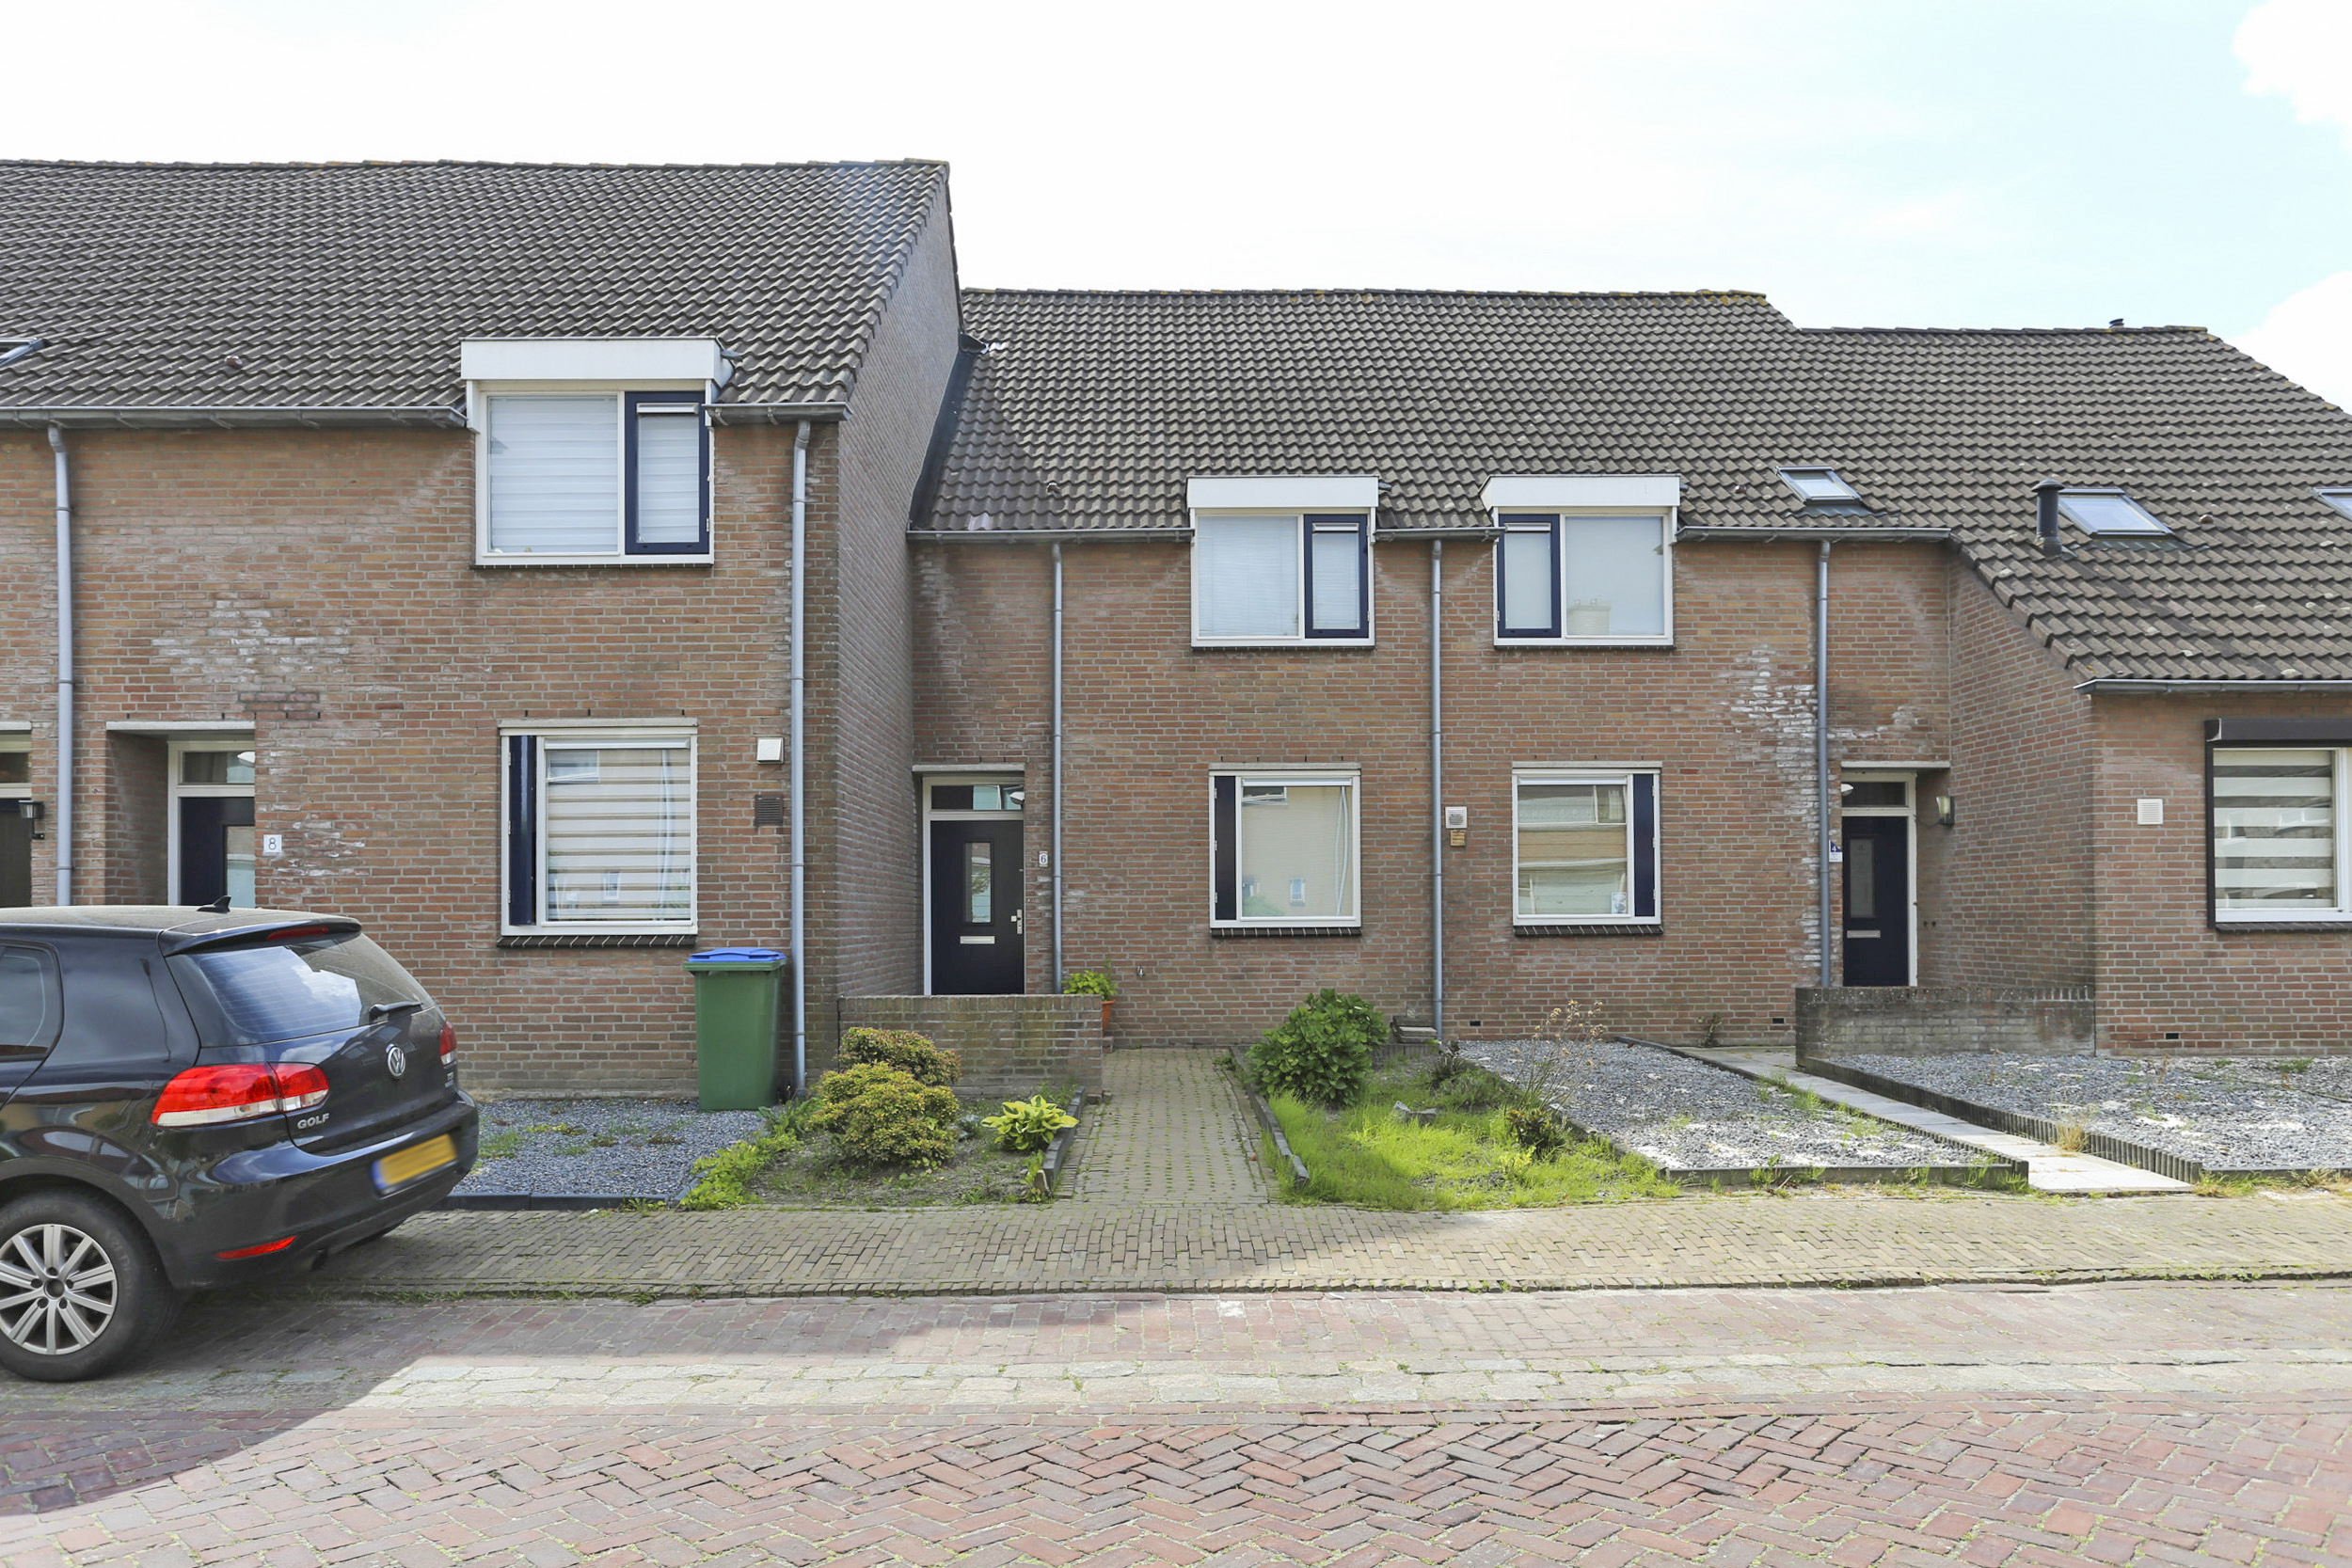 Frans Halsstraat 6, 4793 AB Fijnaart, Nederland